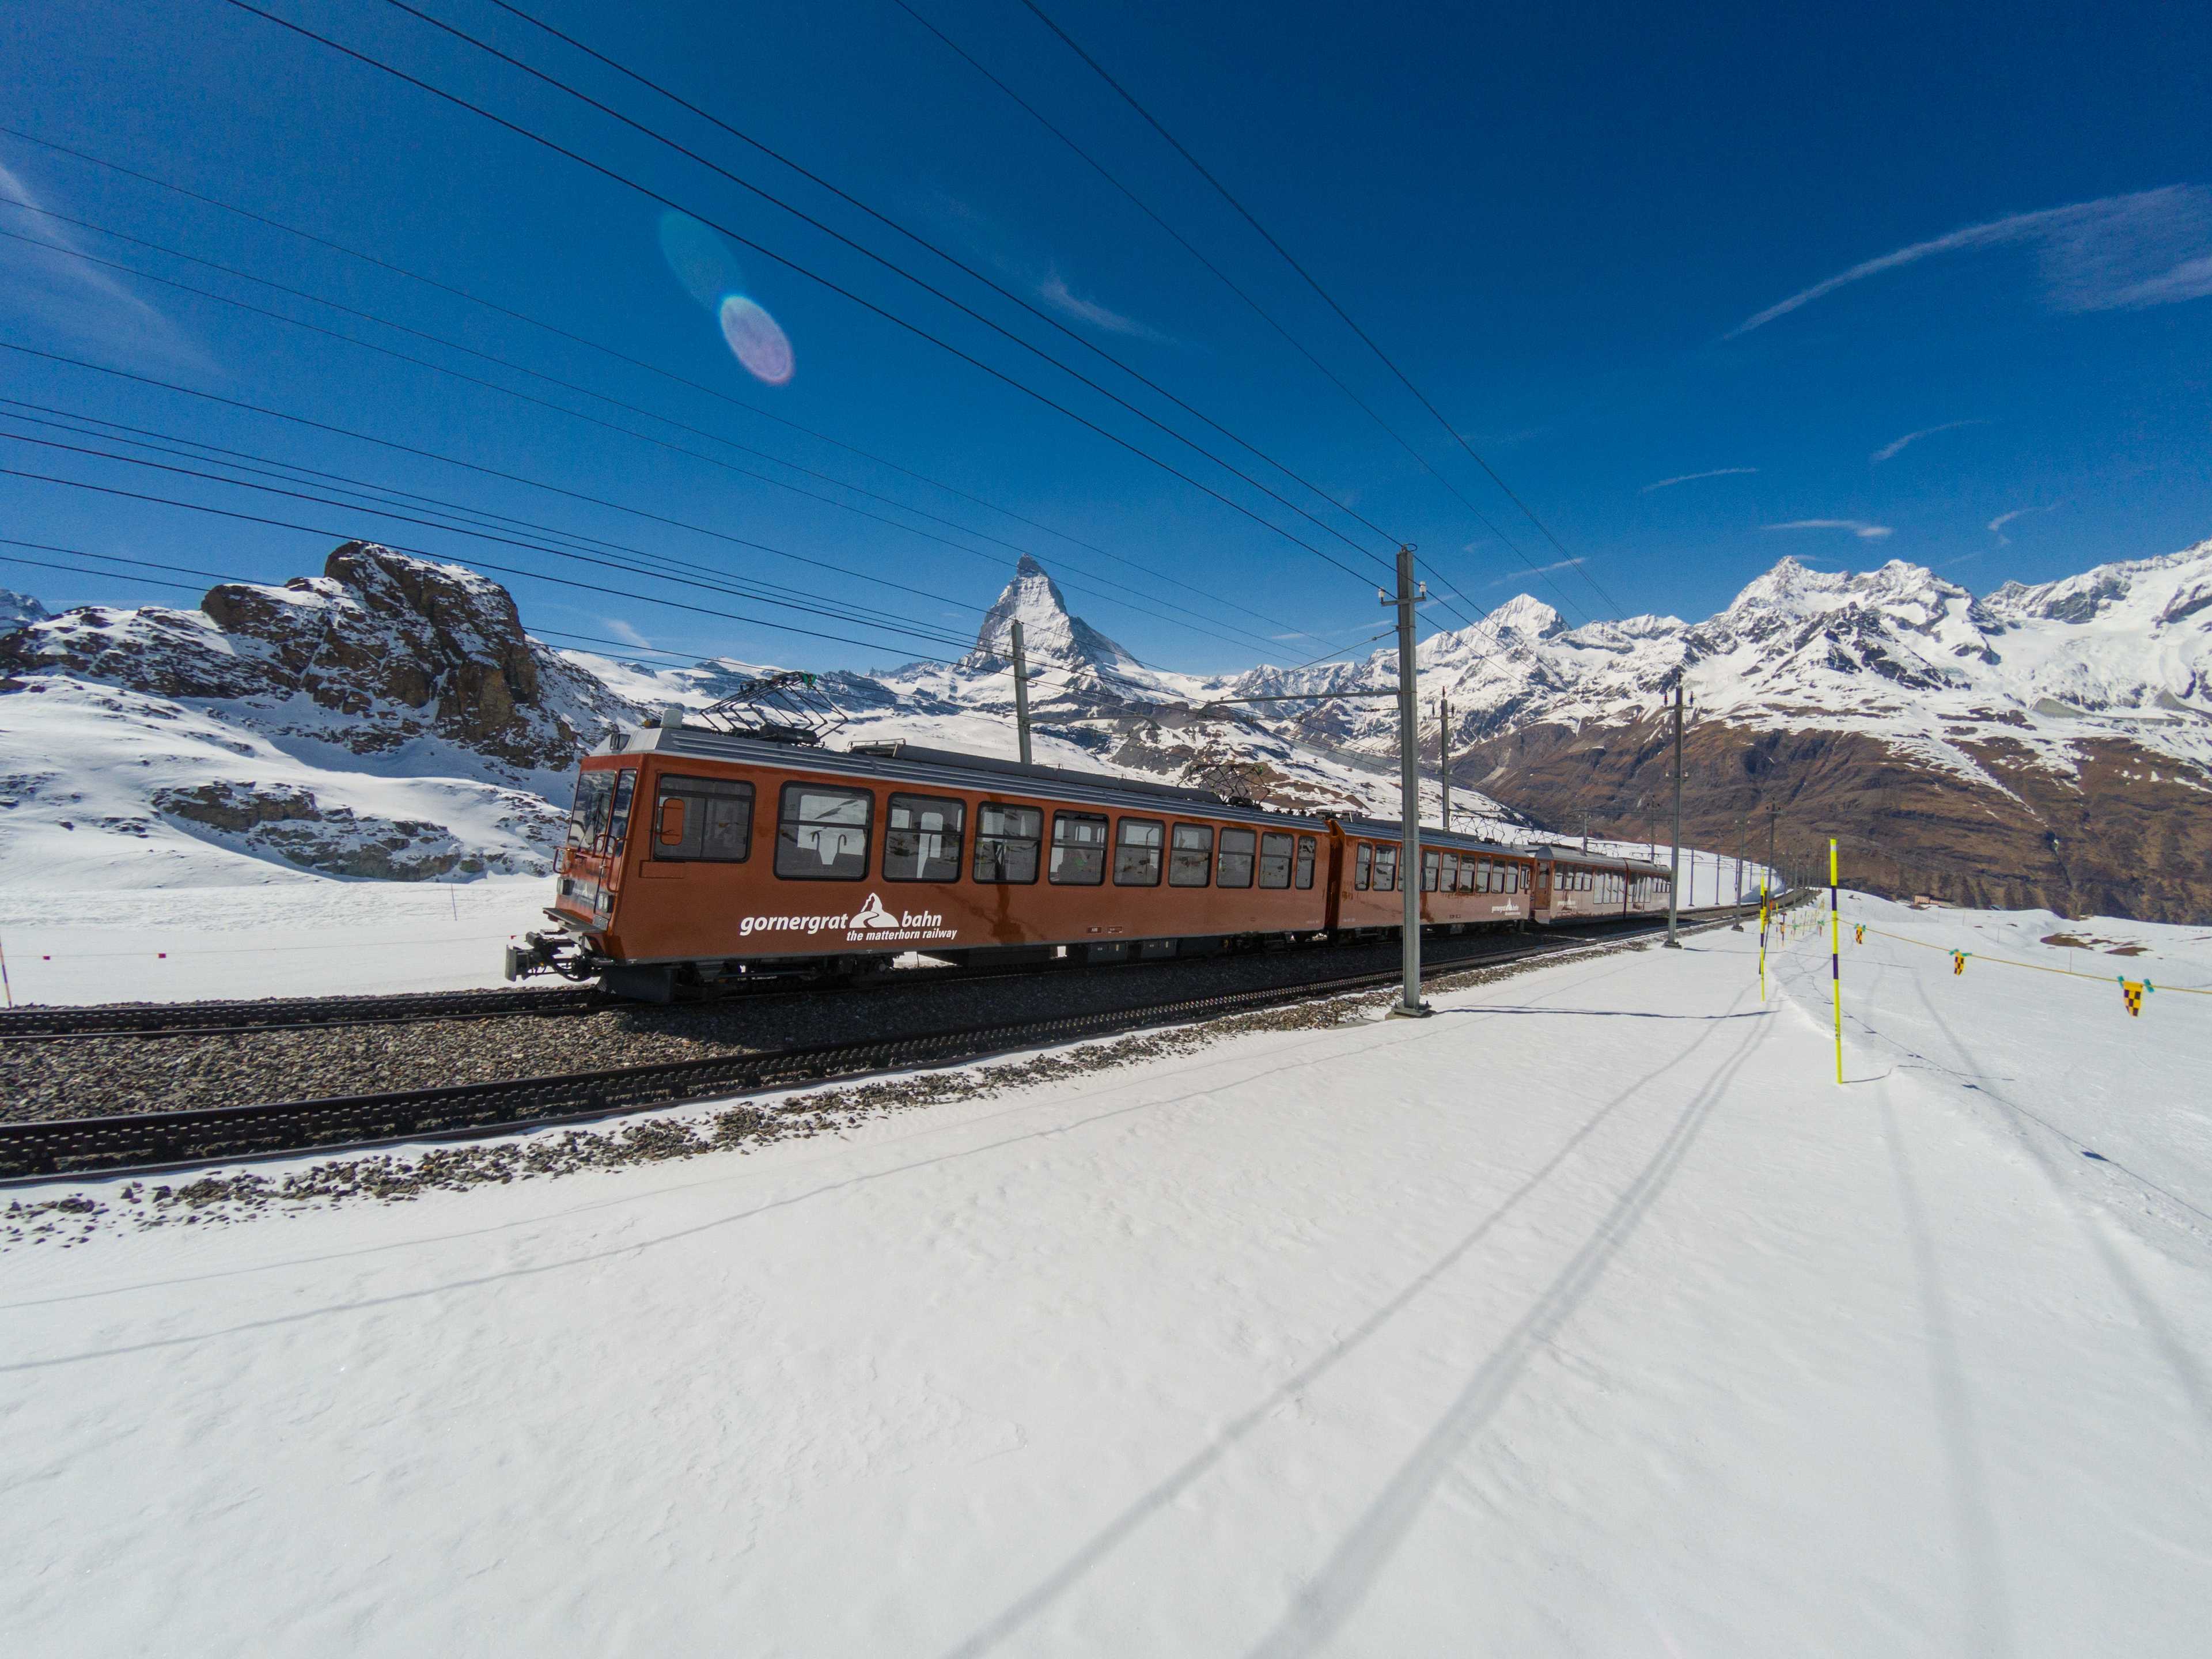 Gornergrat Bahn, Zermatt